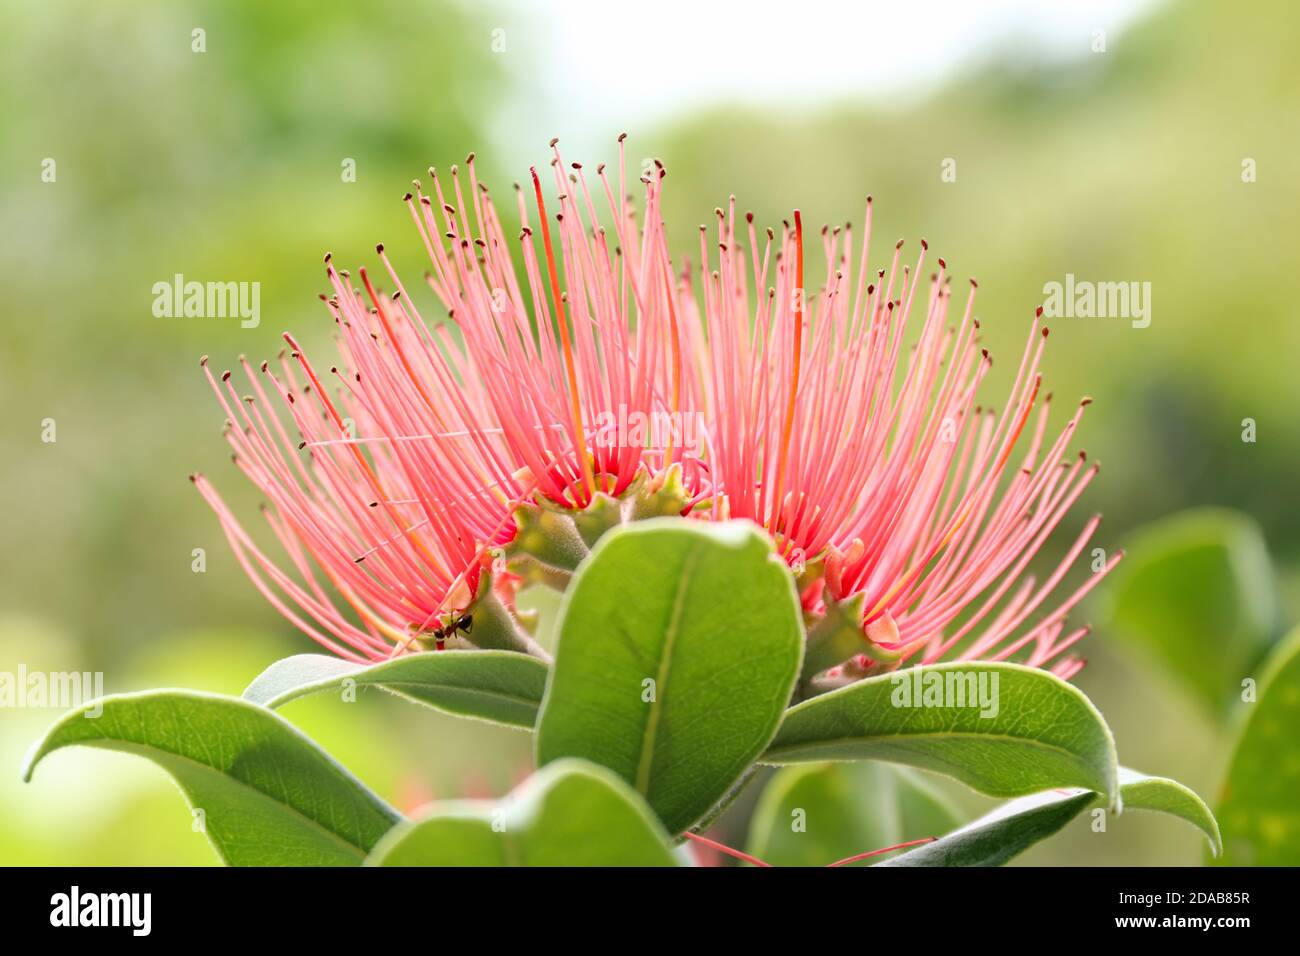 Bloom of the Persian silk tree - albizia julibrissin - detail Stock Photo